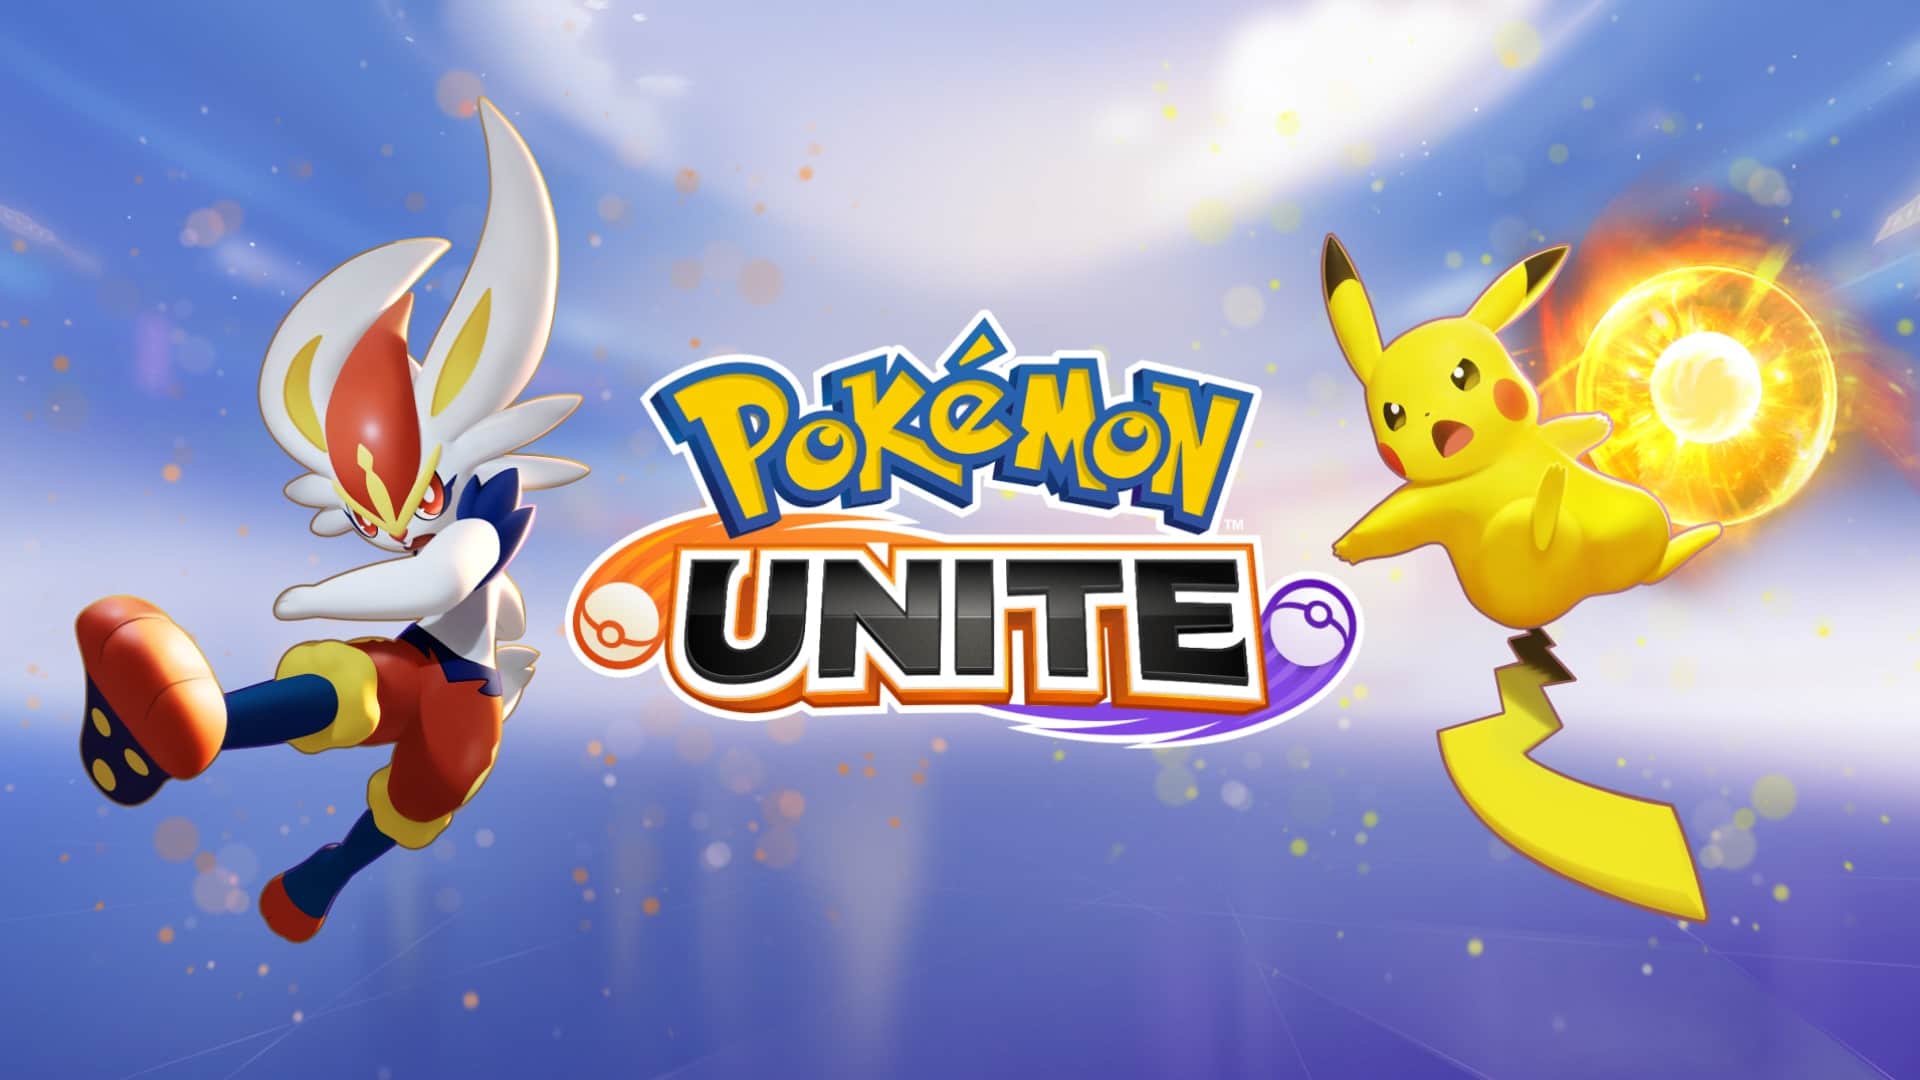 A new Pokémon appears in the Pokémon Unite code Sunday Vision